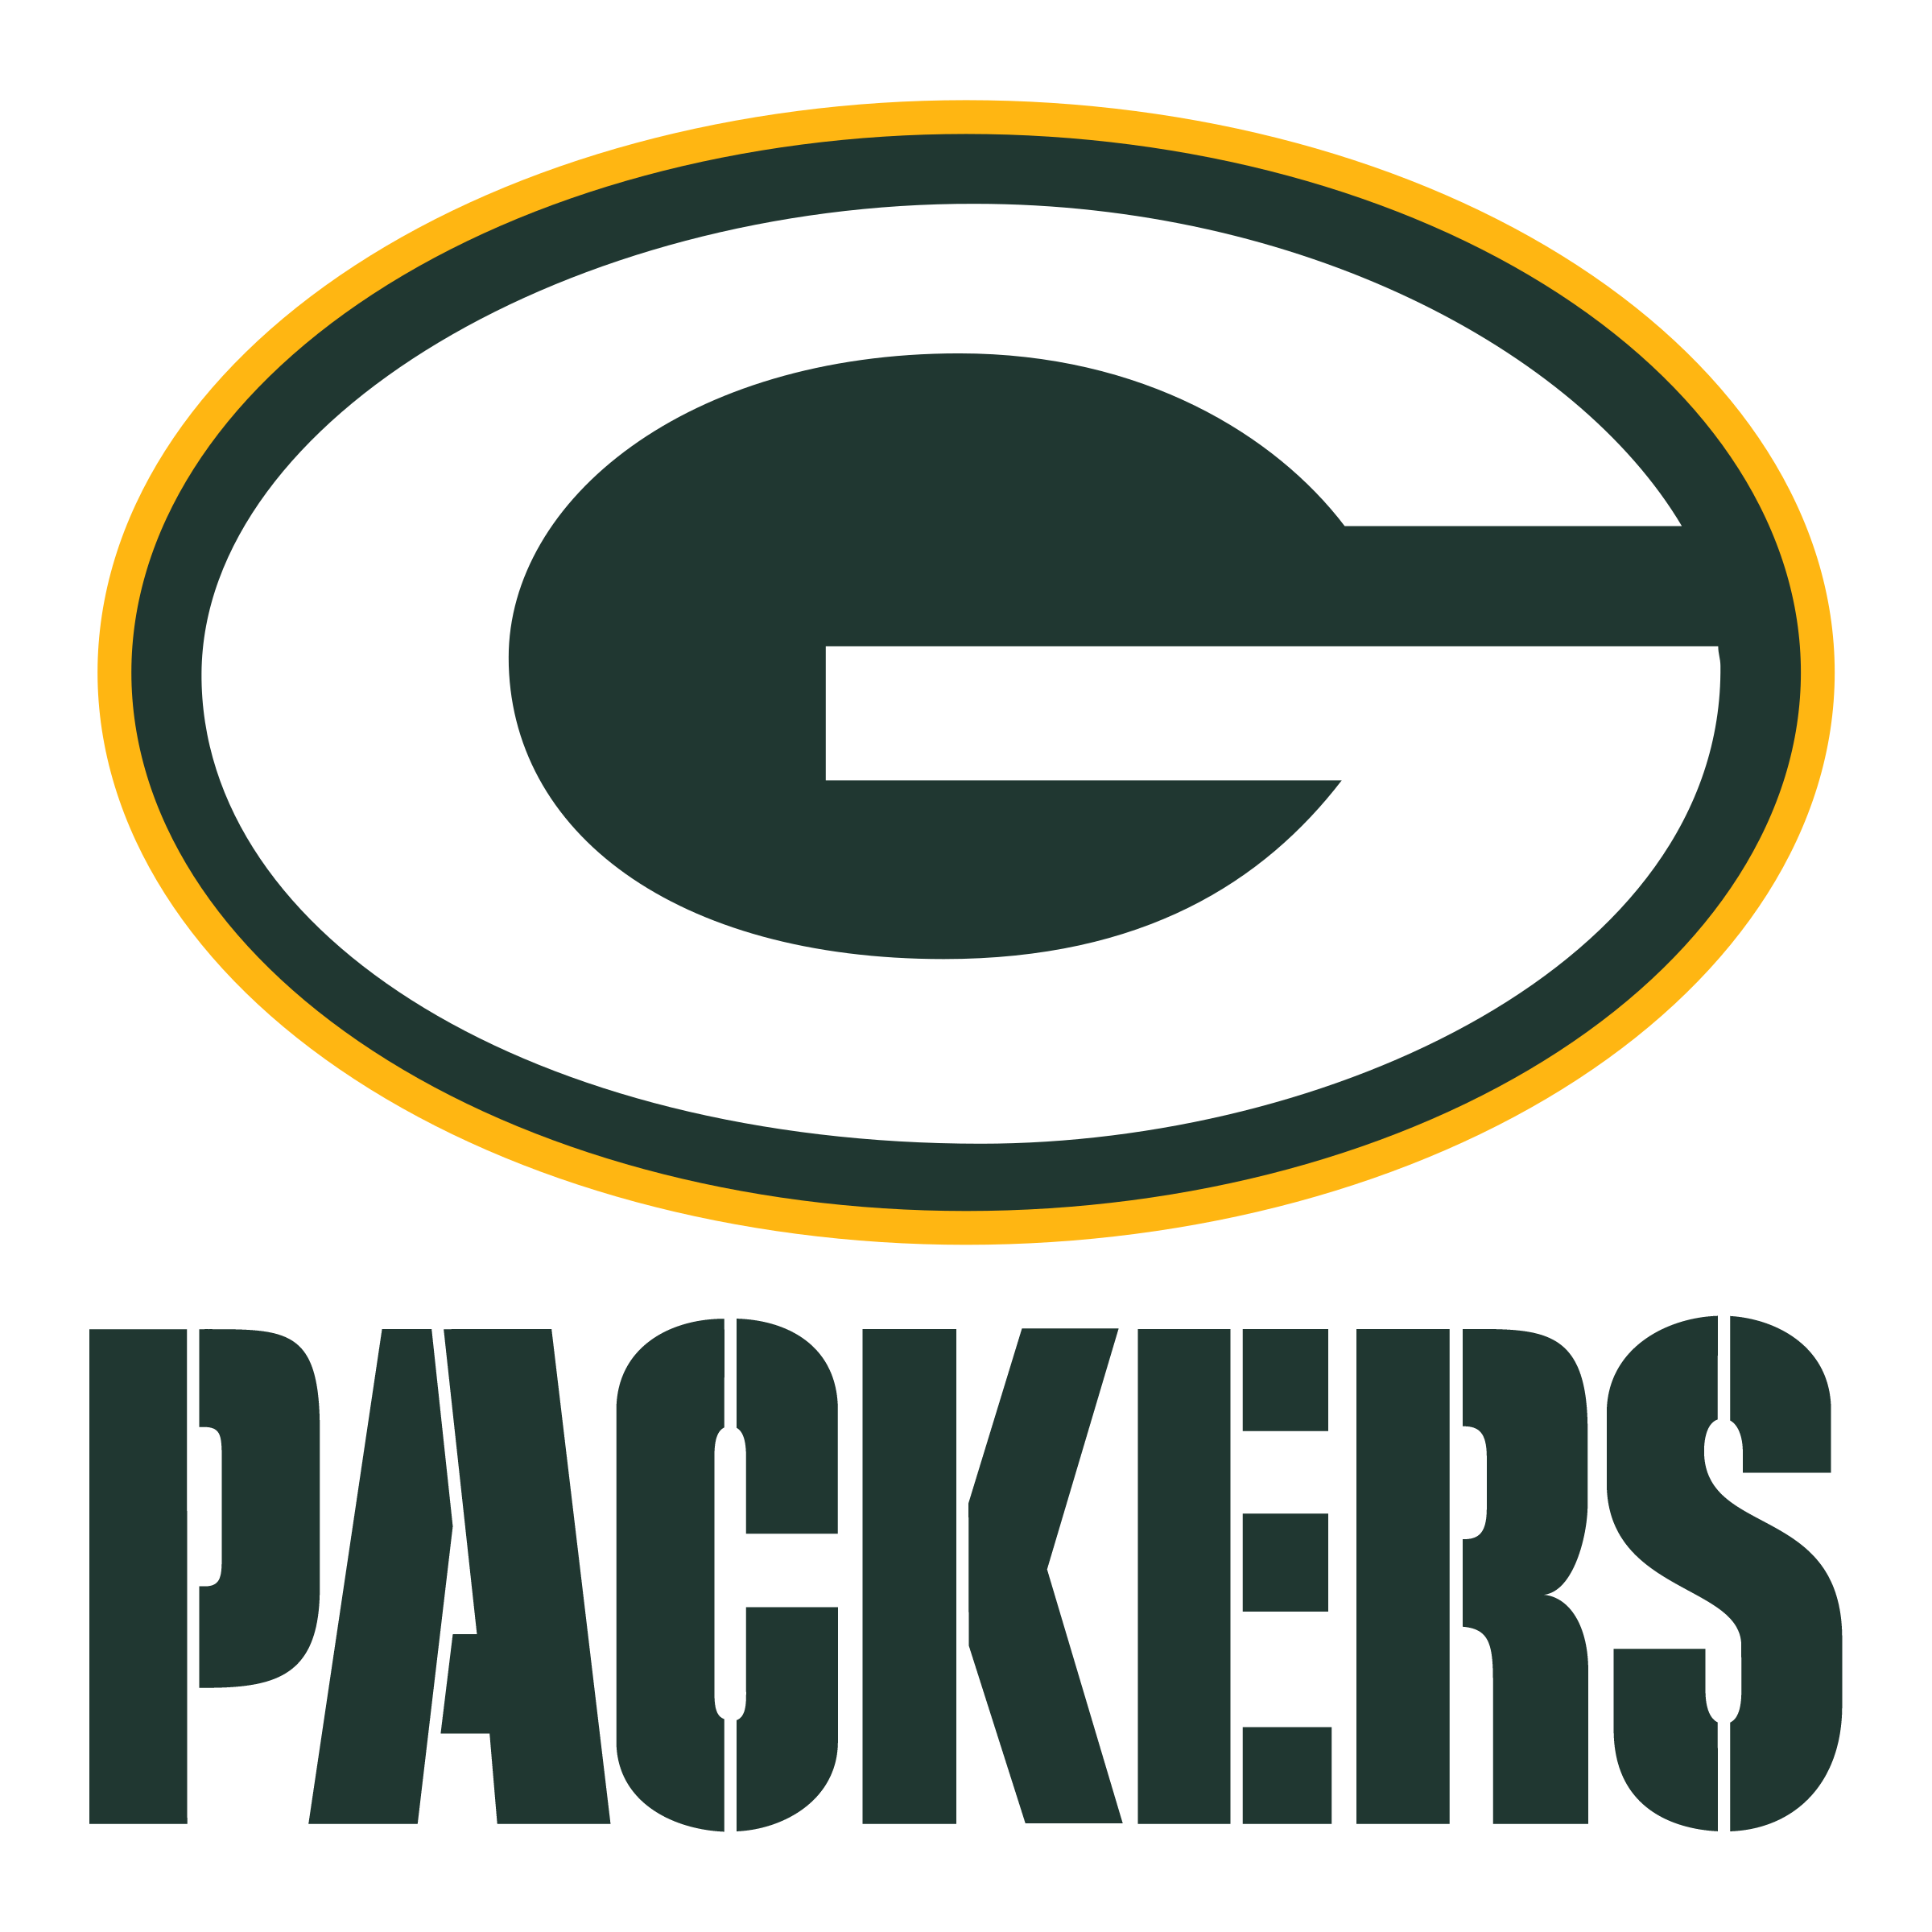 Green Bay Logo - Green Bay Packers Logo PNG Transparent & SVG Vector - Freebie Supply